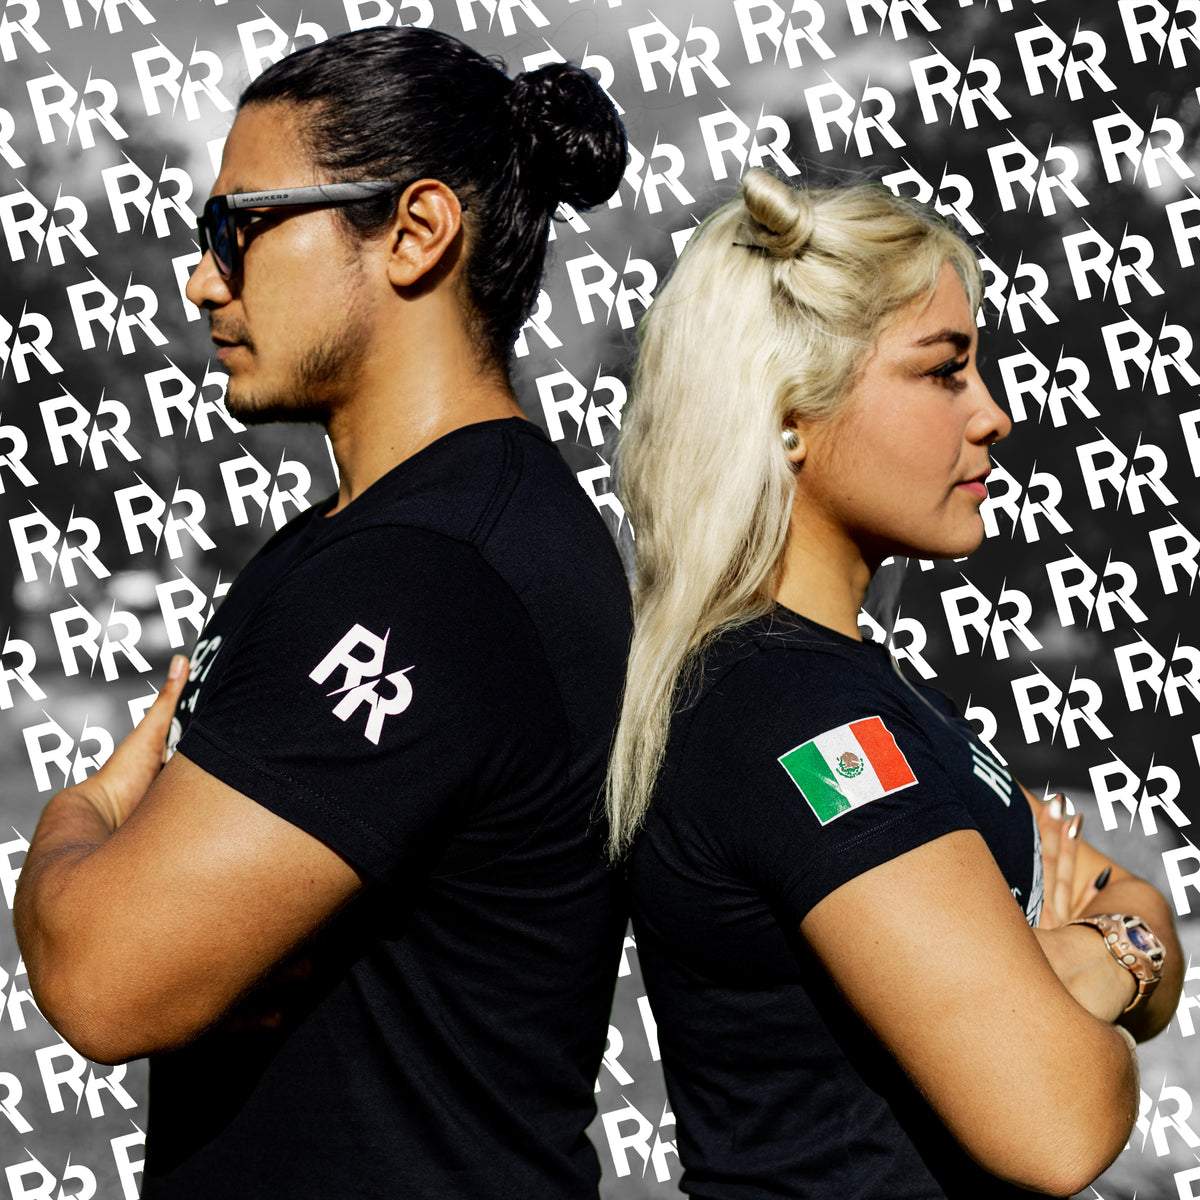 Playeras para Hombre - Hecho en Mexico - Rep x Rep - Crossfit Mexico – REP  x REP